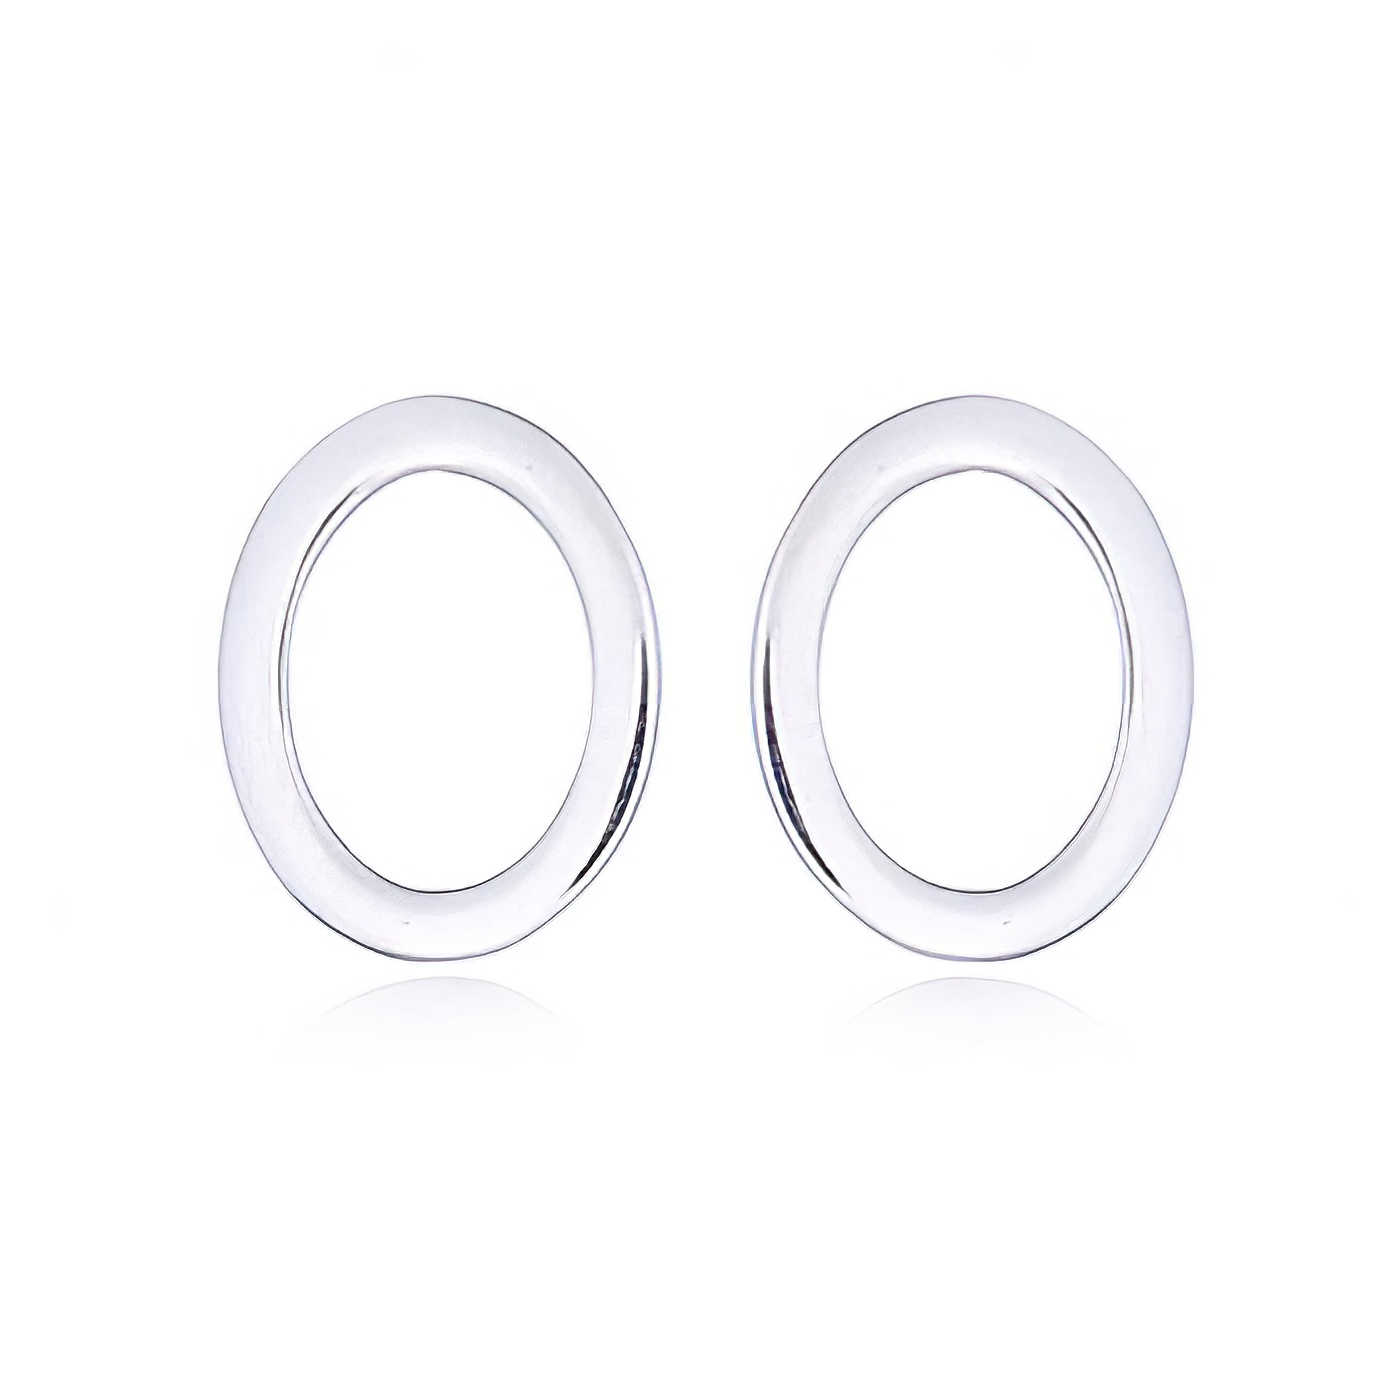 Oval Open High Polished Silver Stud Earrings by BeYindi 